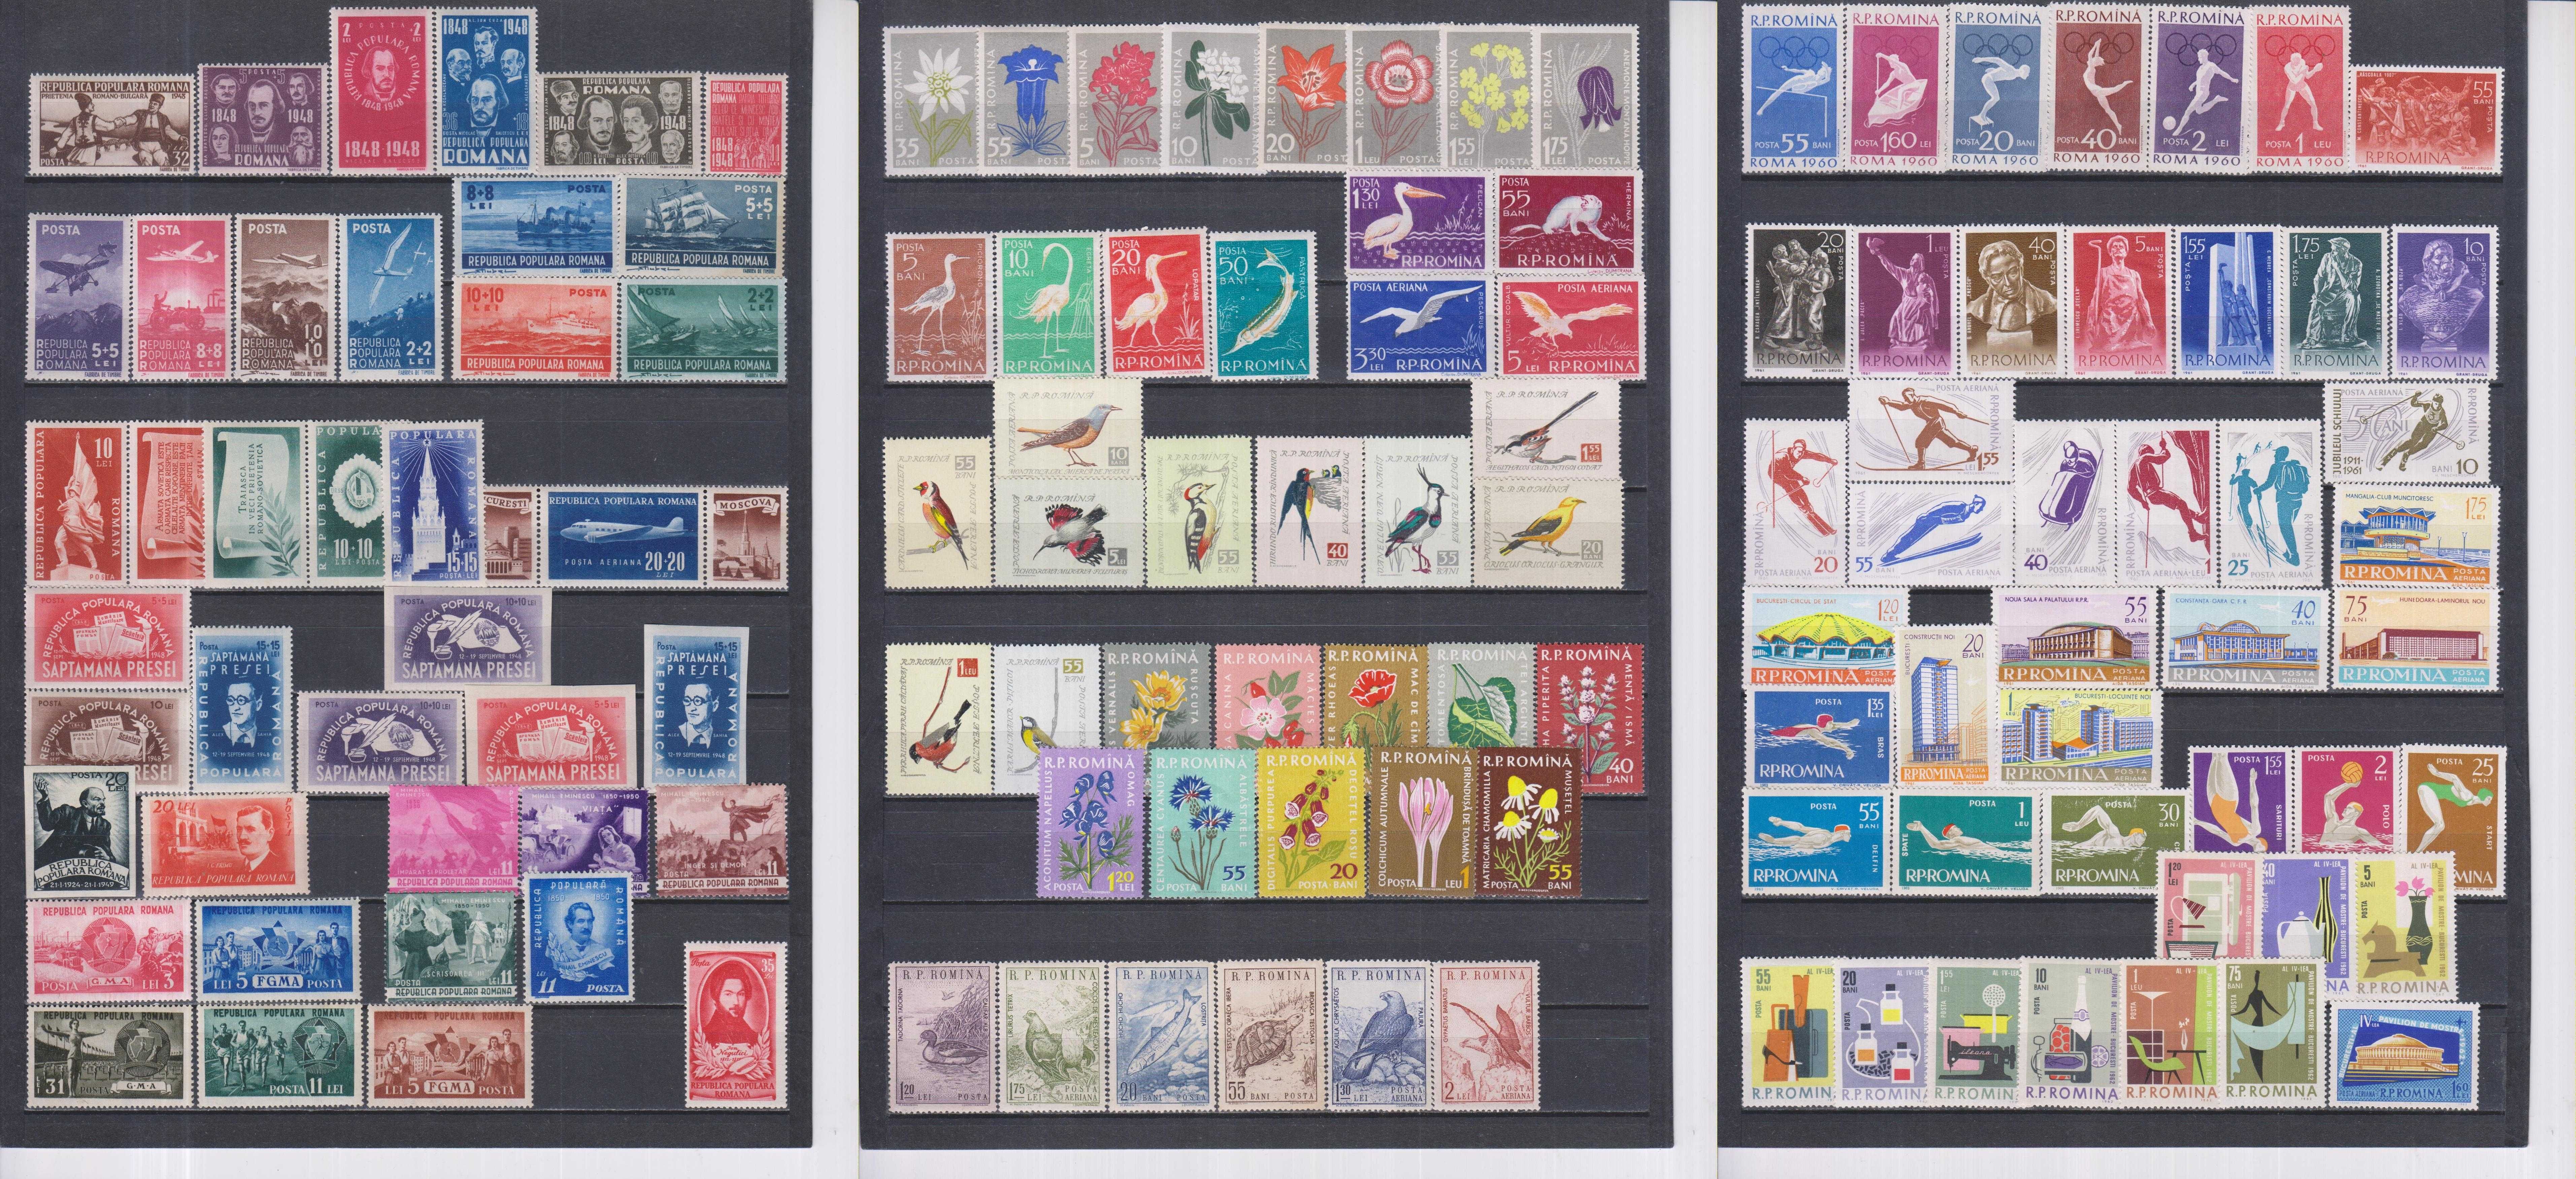 Lot de timbre romanesti - partea a doua